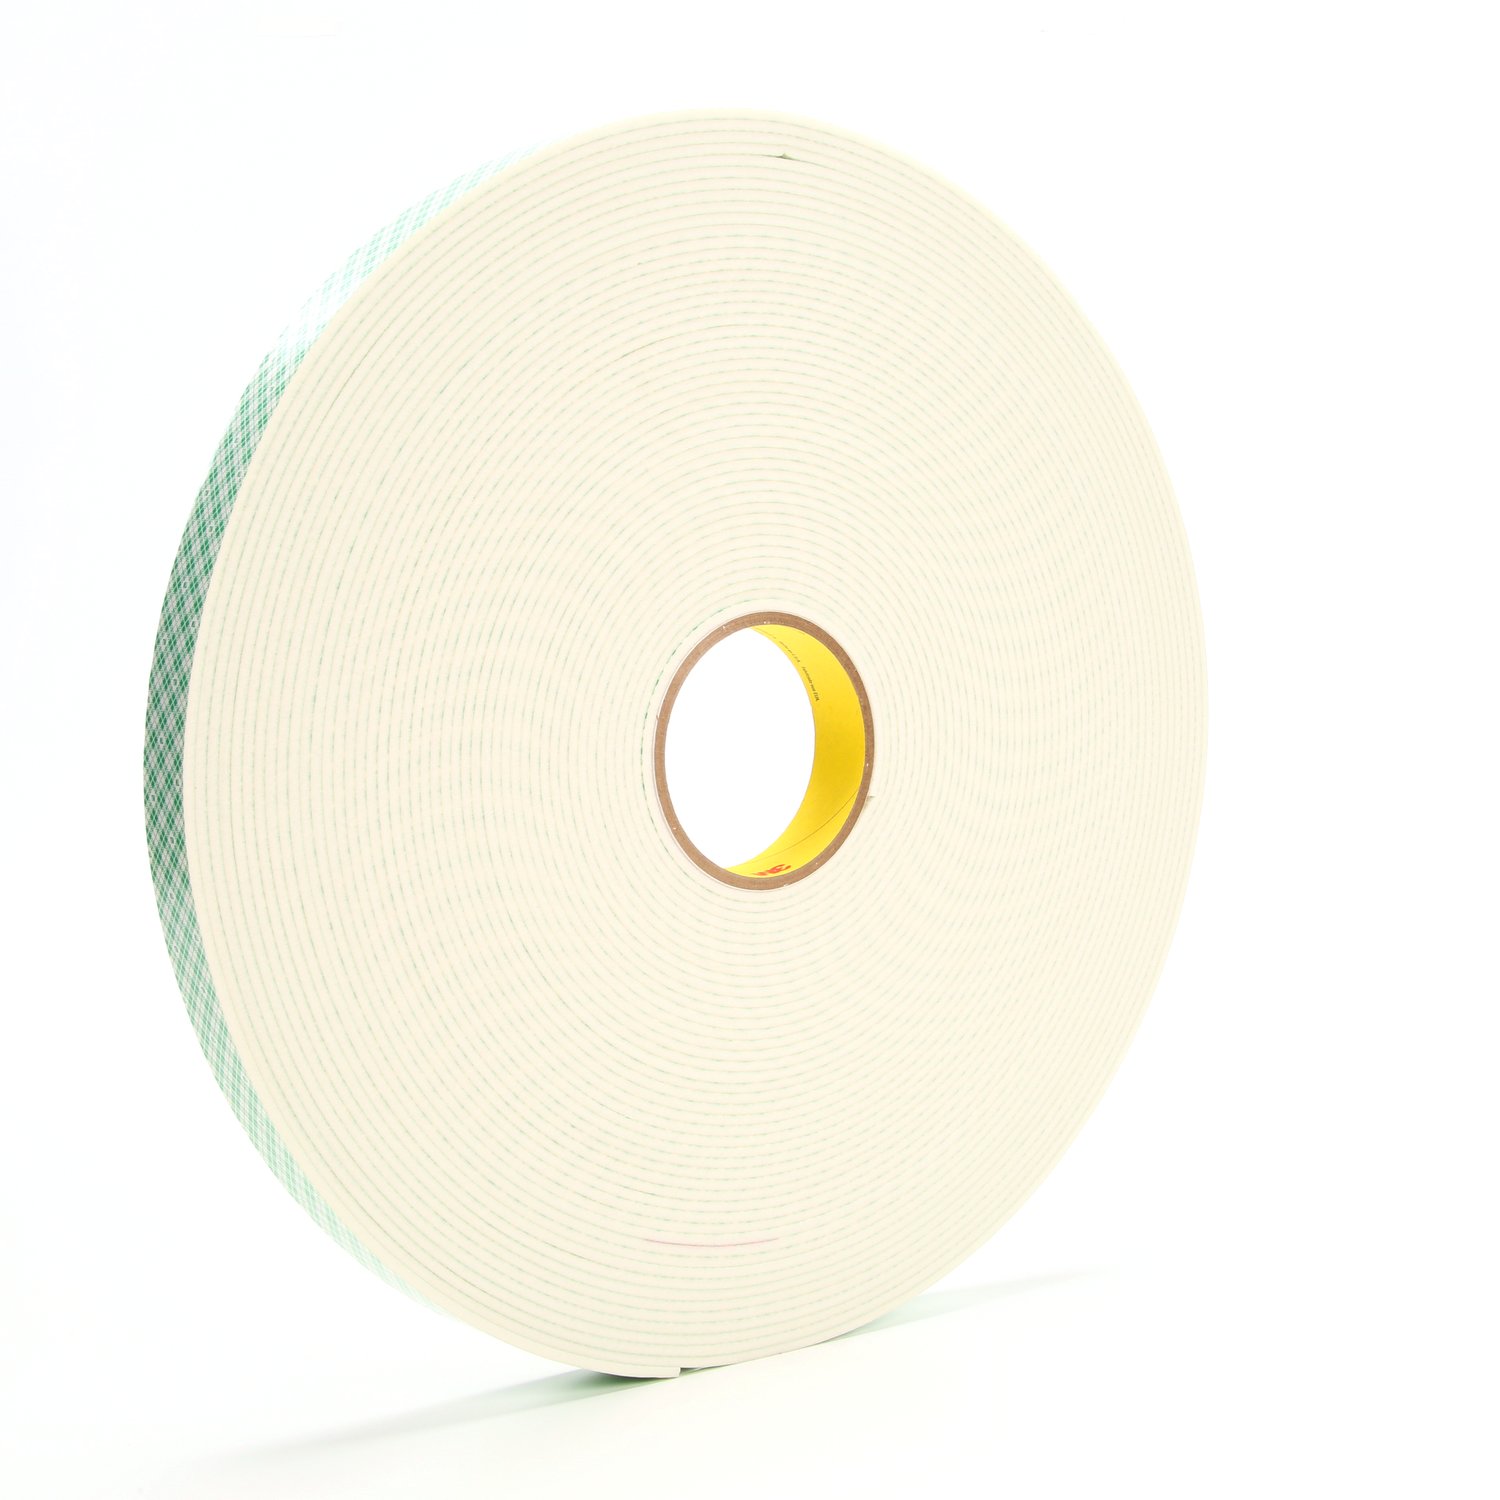 1 x 1.5 x 40' Polyether Urethane Foam Tape - Box of 4